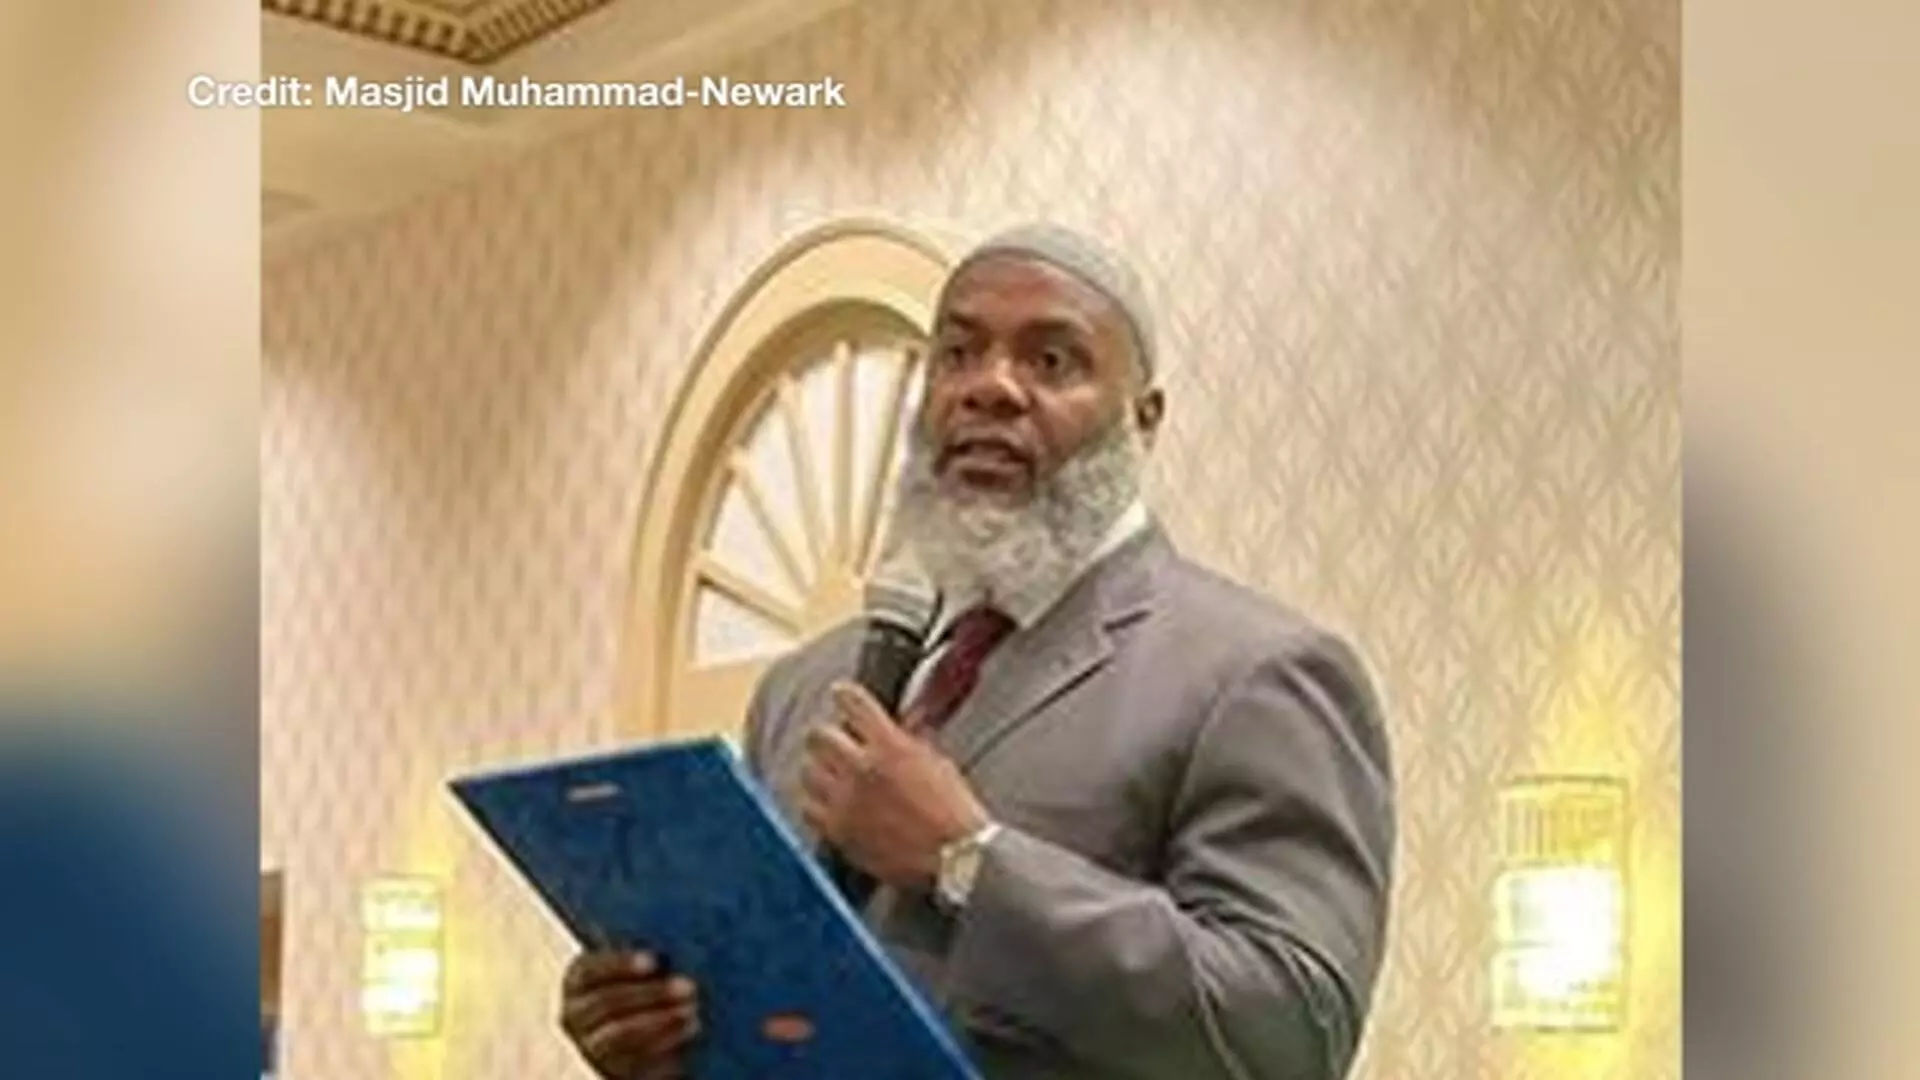 US Imam shot outside Newark mosque dies amid rising hate crimes